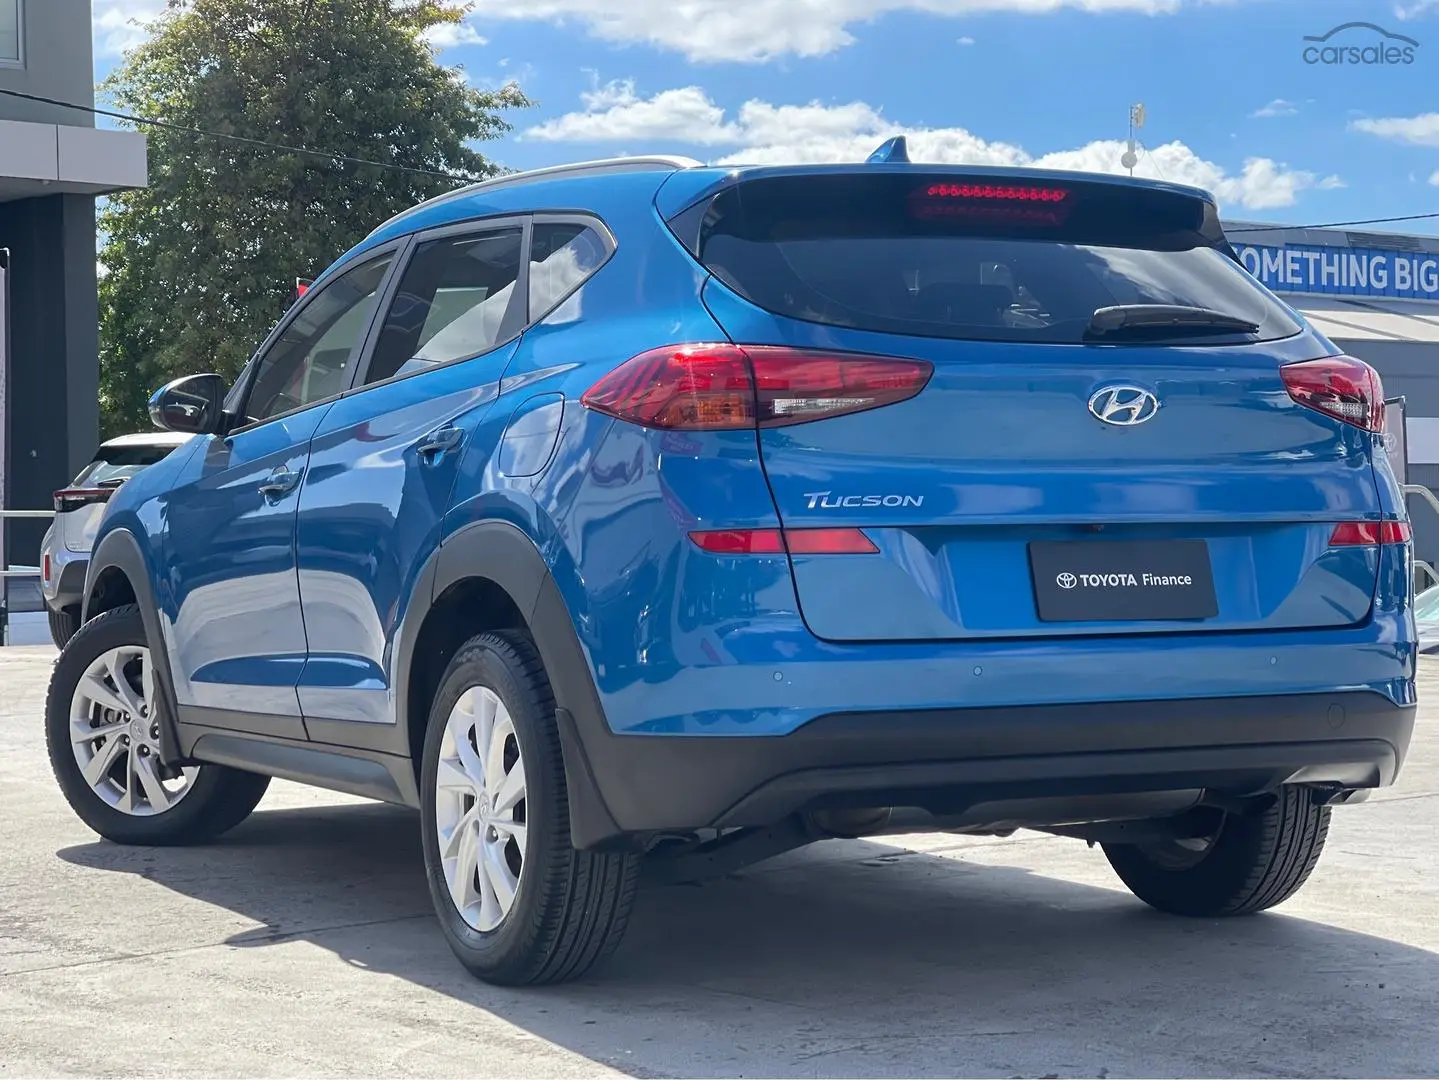 2019 Hyundai Tucson Image 4